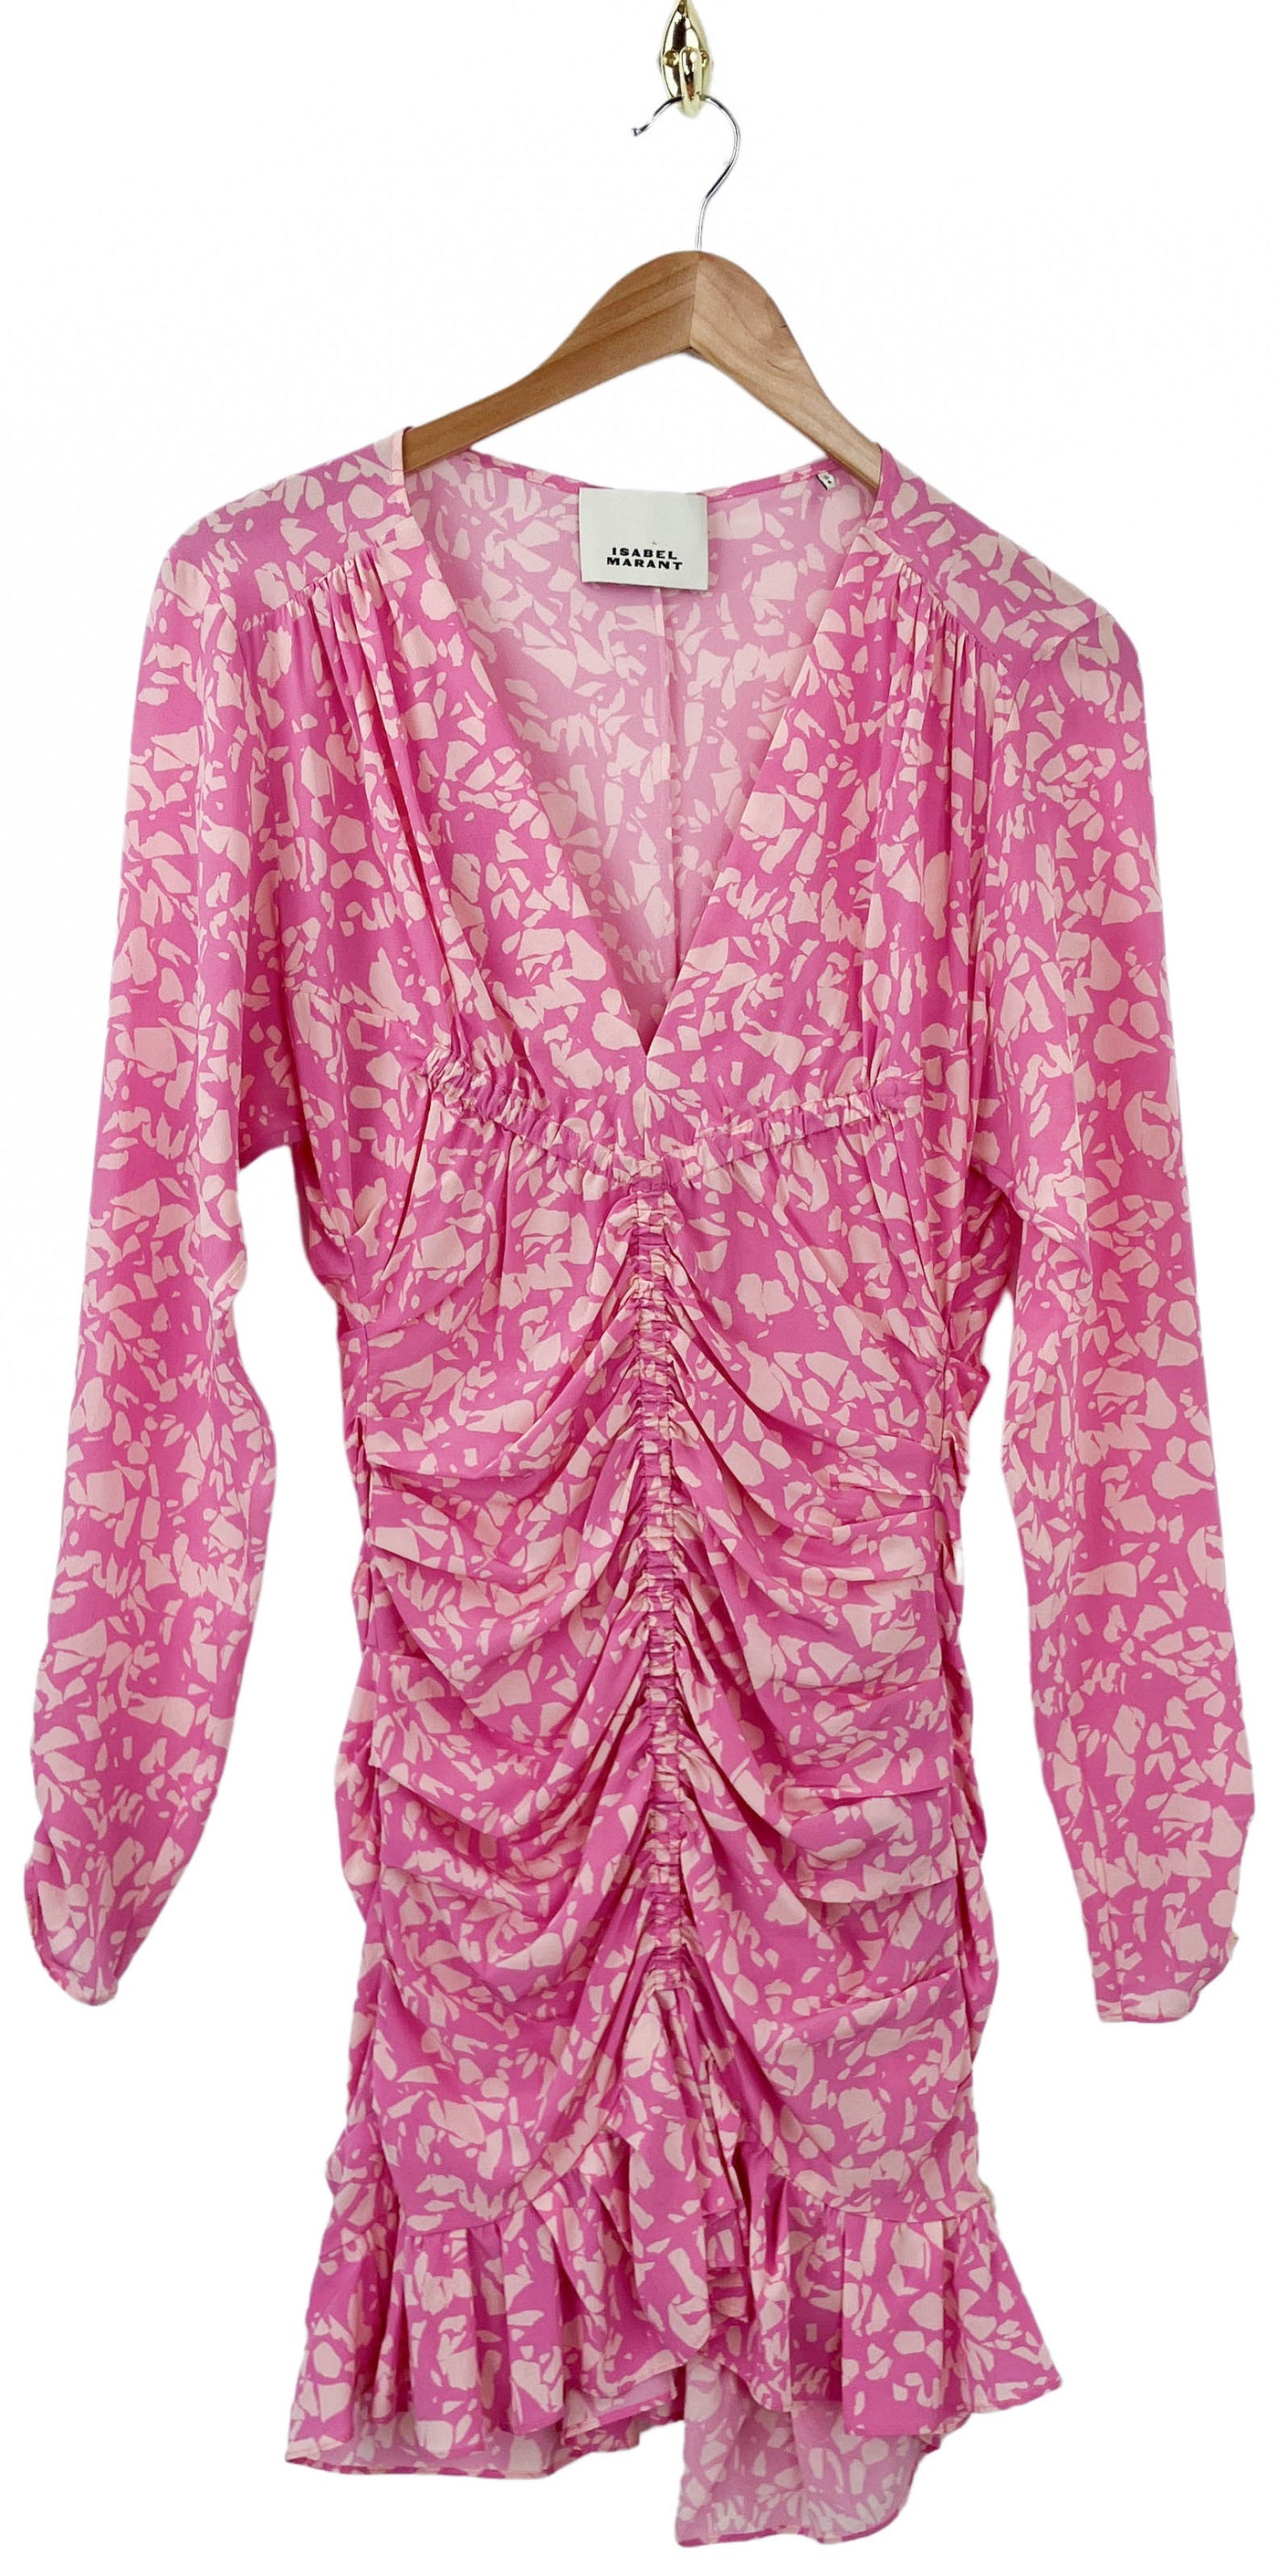 Isabel Marant Lara Dress in Pink - Discounts on Isabel Marant at UAL